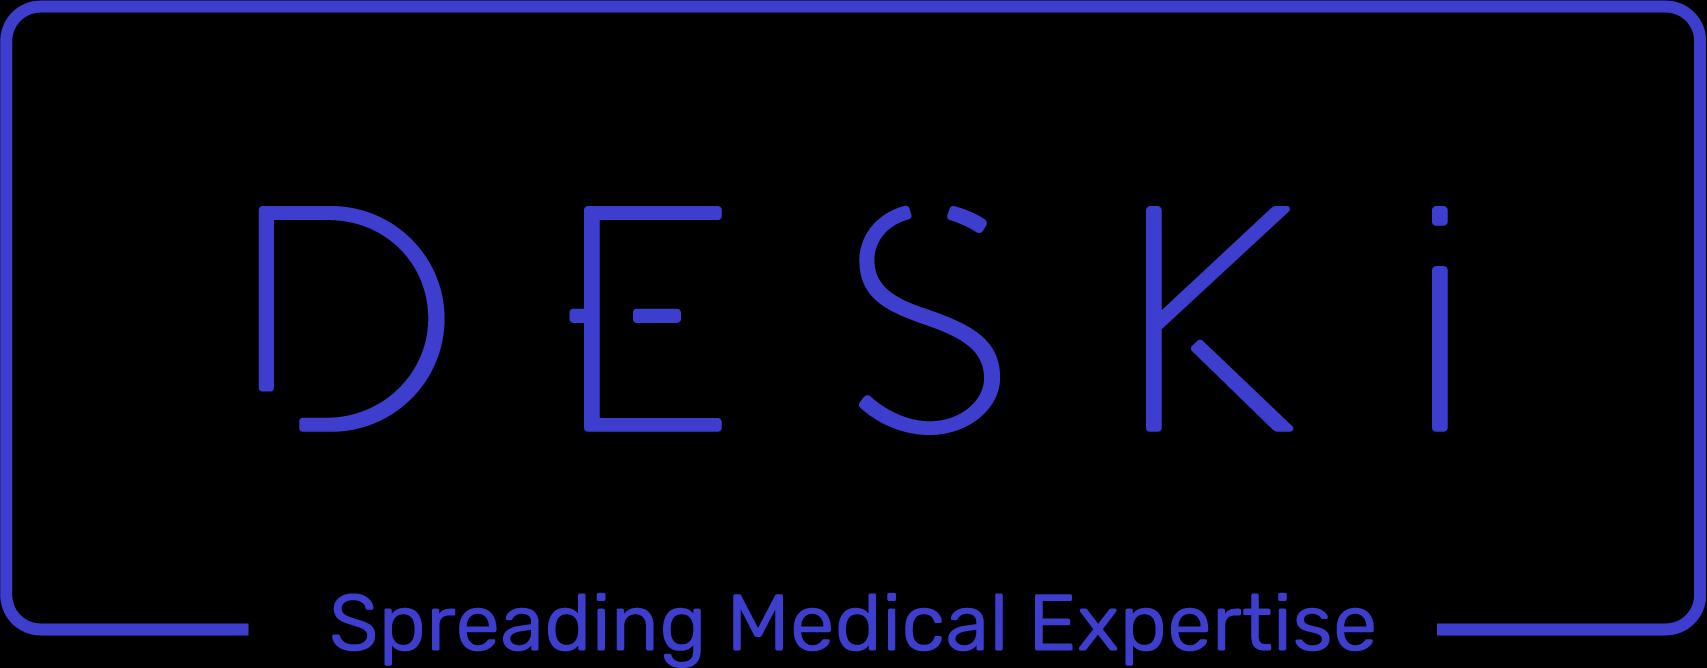 DESKi_logo